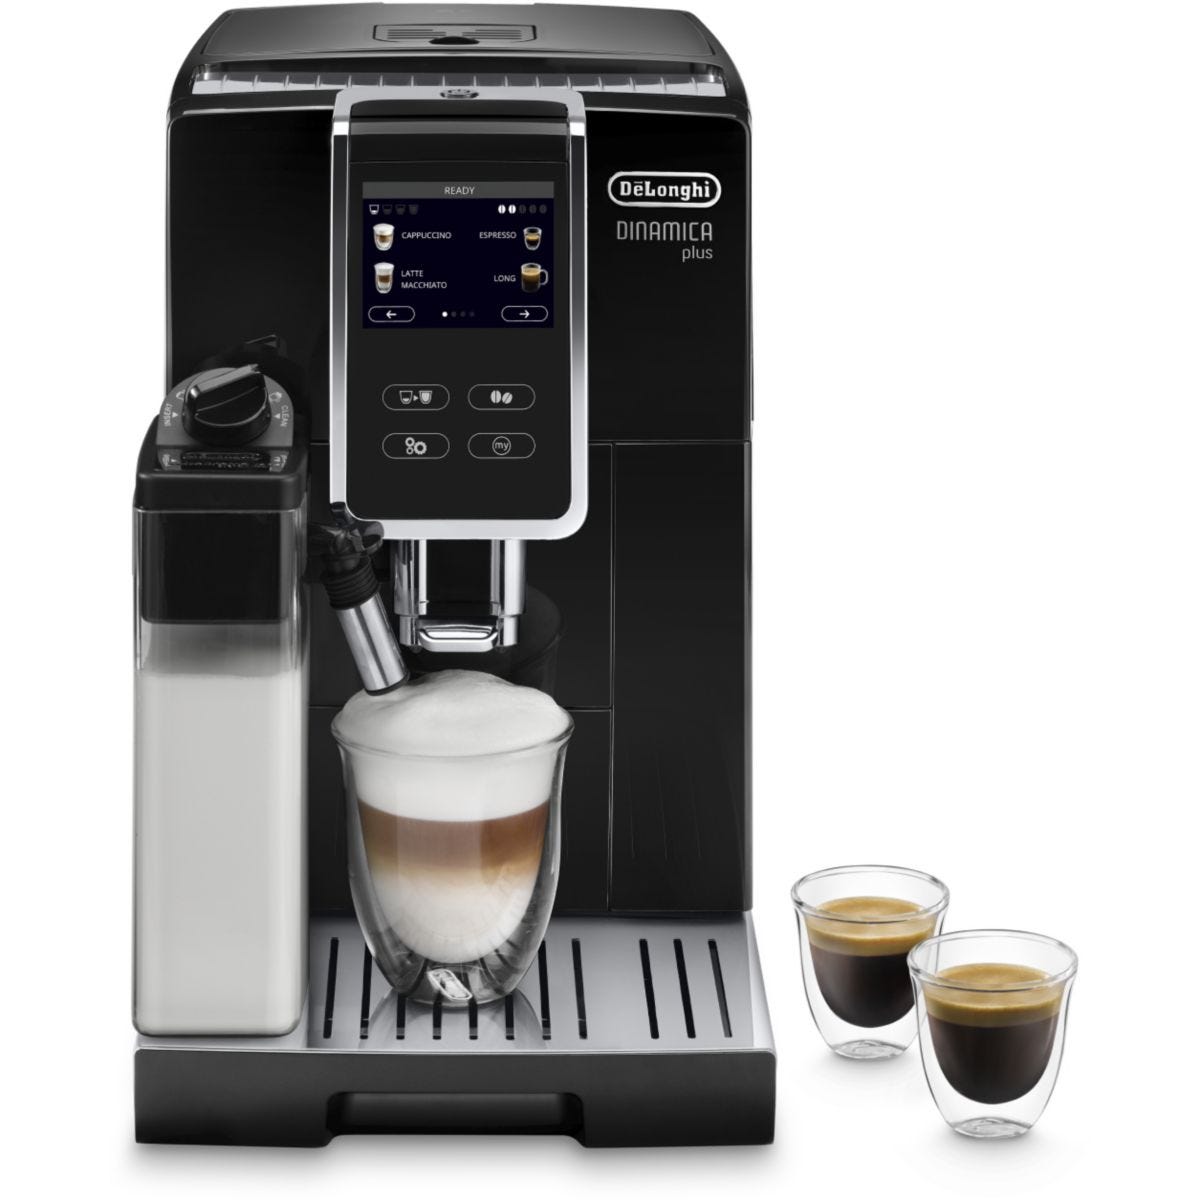 De'Longhi, Cafetera Dinámica Automática para Café y Espresso